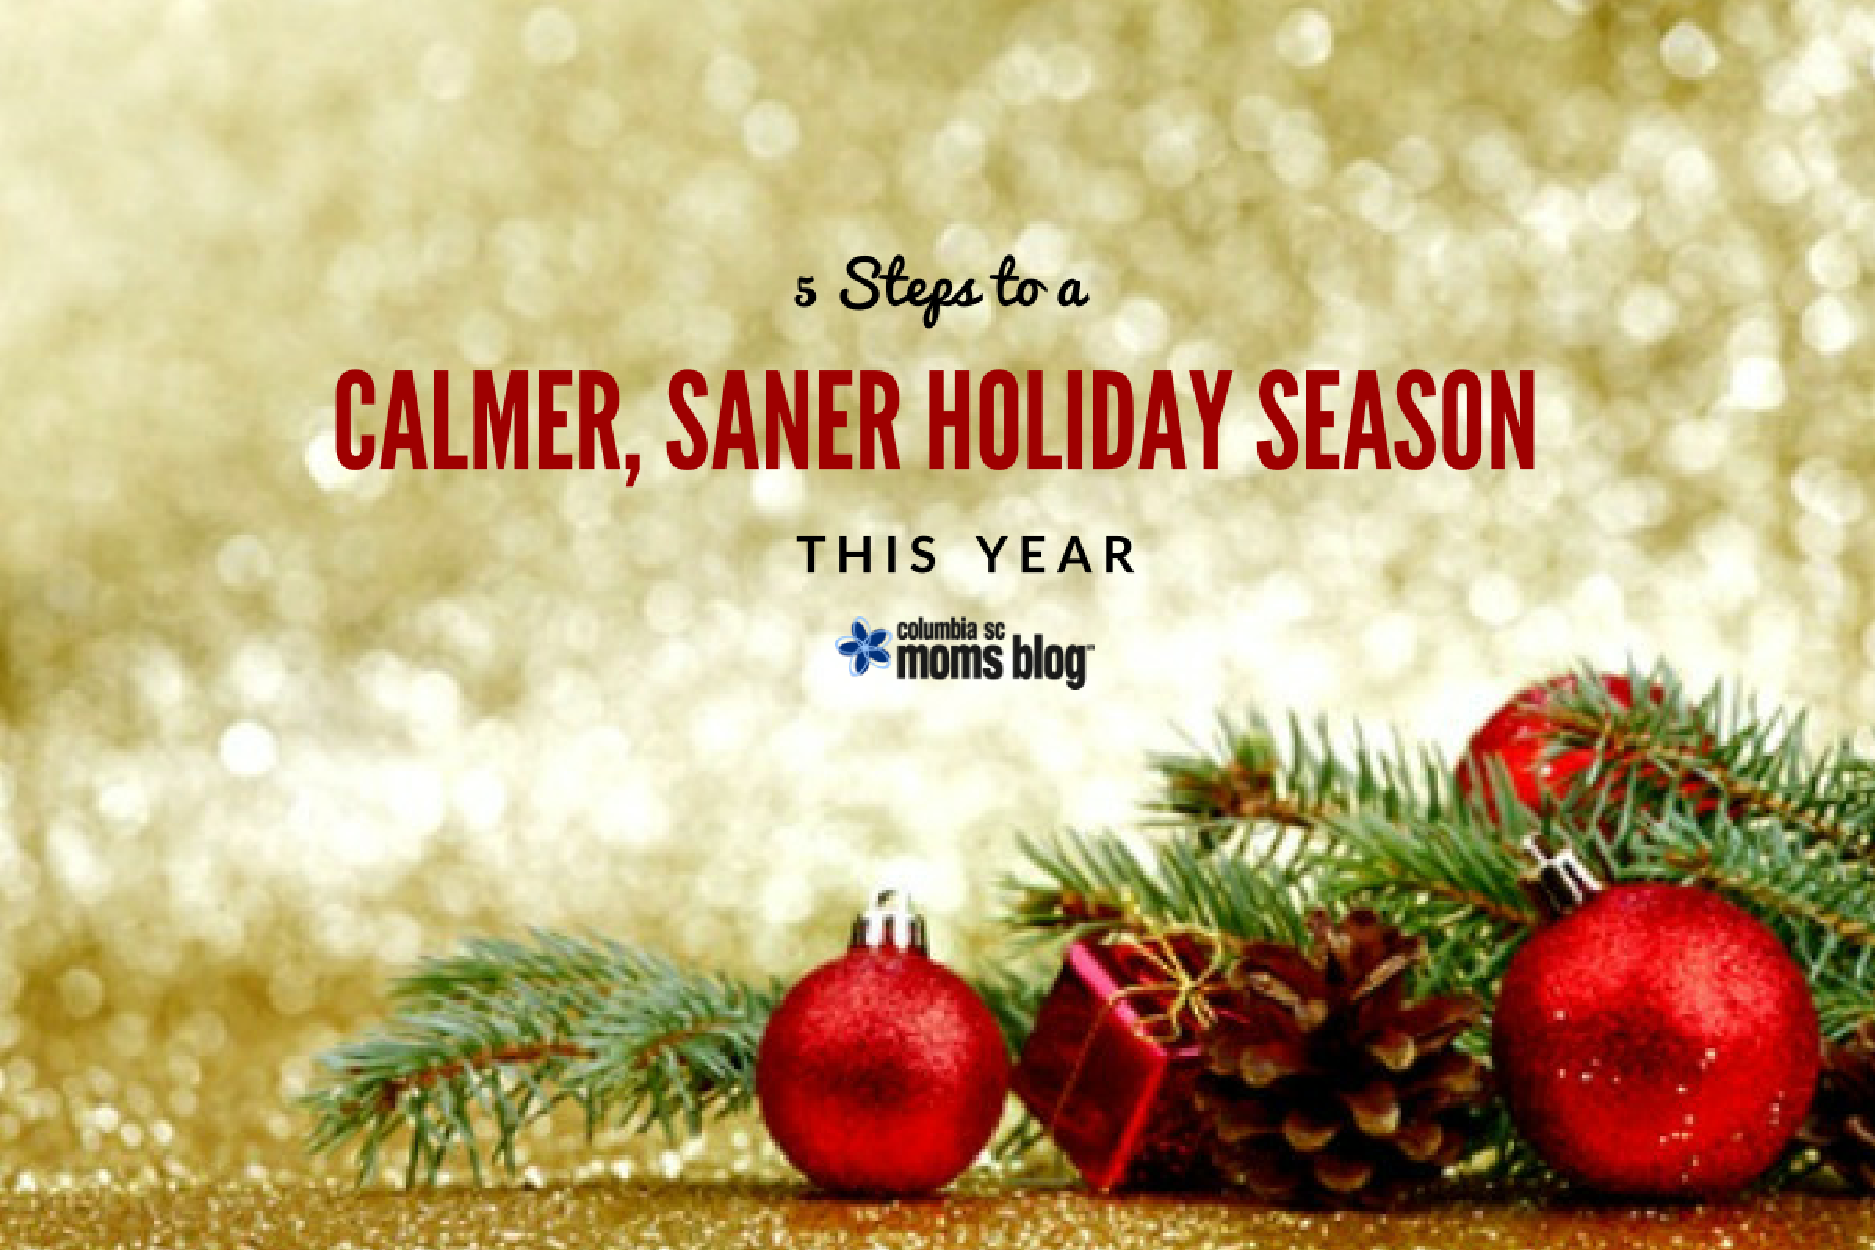 5 Steps to a Calmer, Saner Holiday Season this Year - Columbia SC Moms Blog